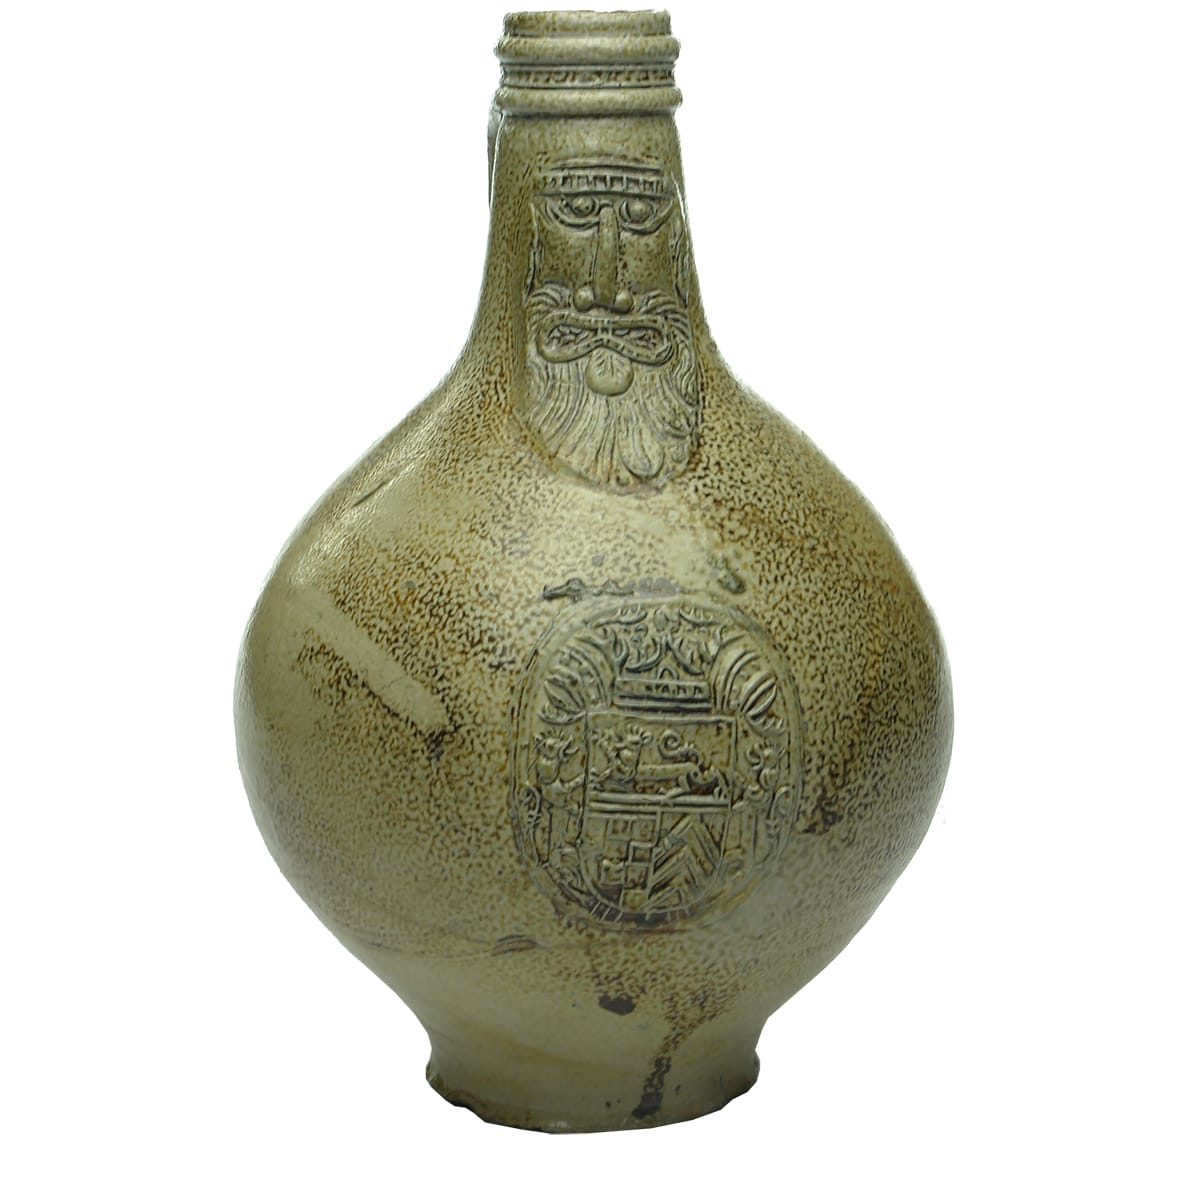 Bellarmine. Bearded face & Coat of Arms. Stoneware wine jug.